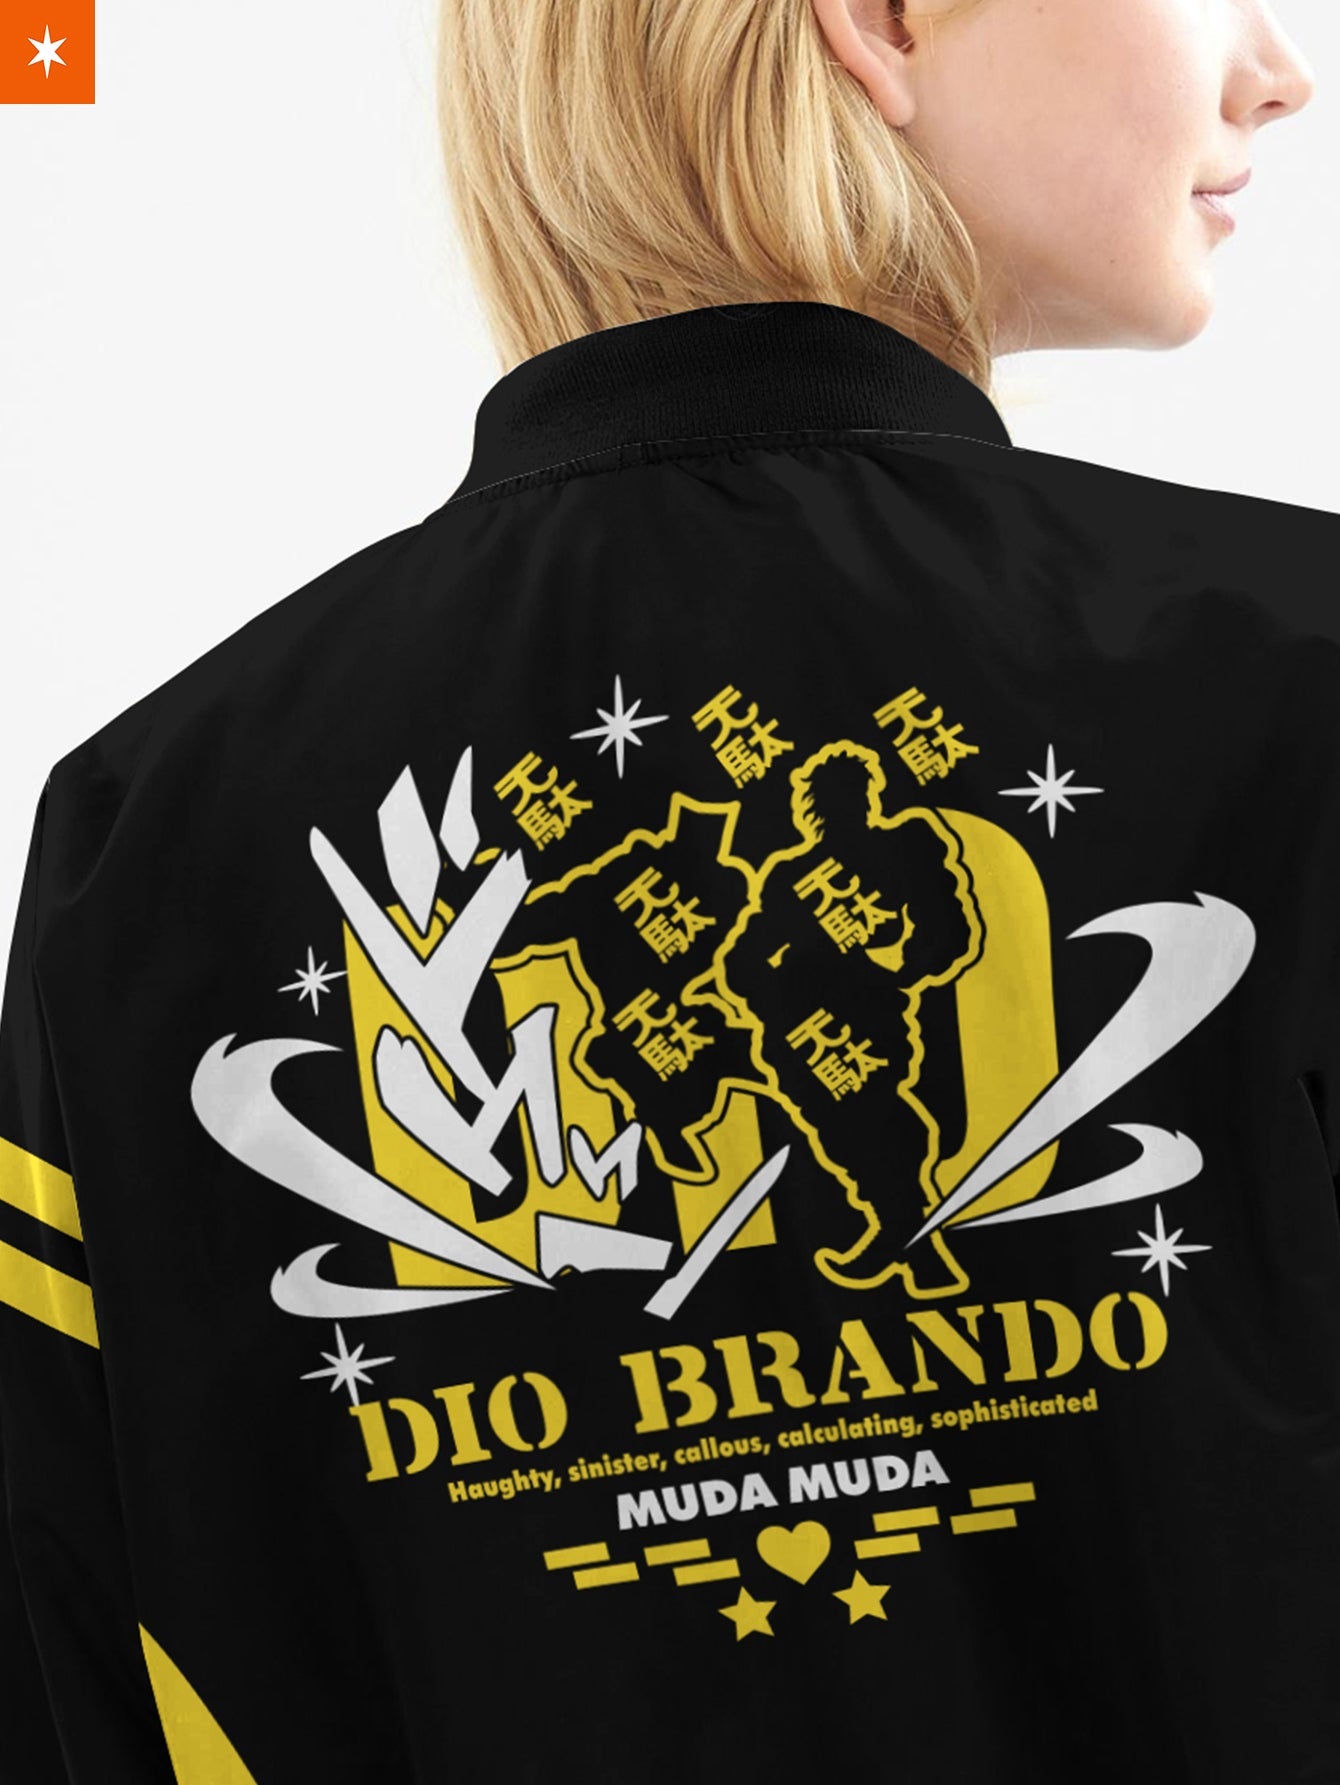 Fandomaniax - Dio Brando Bomber Jacket